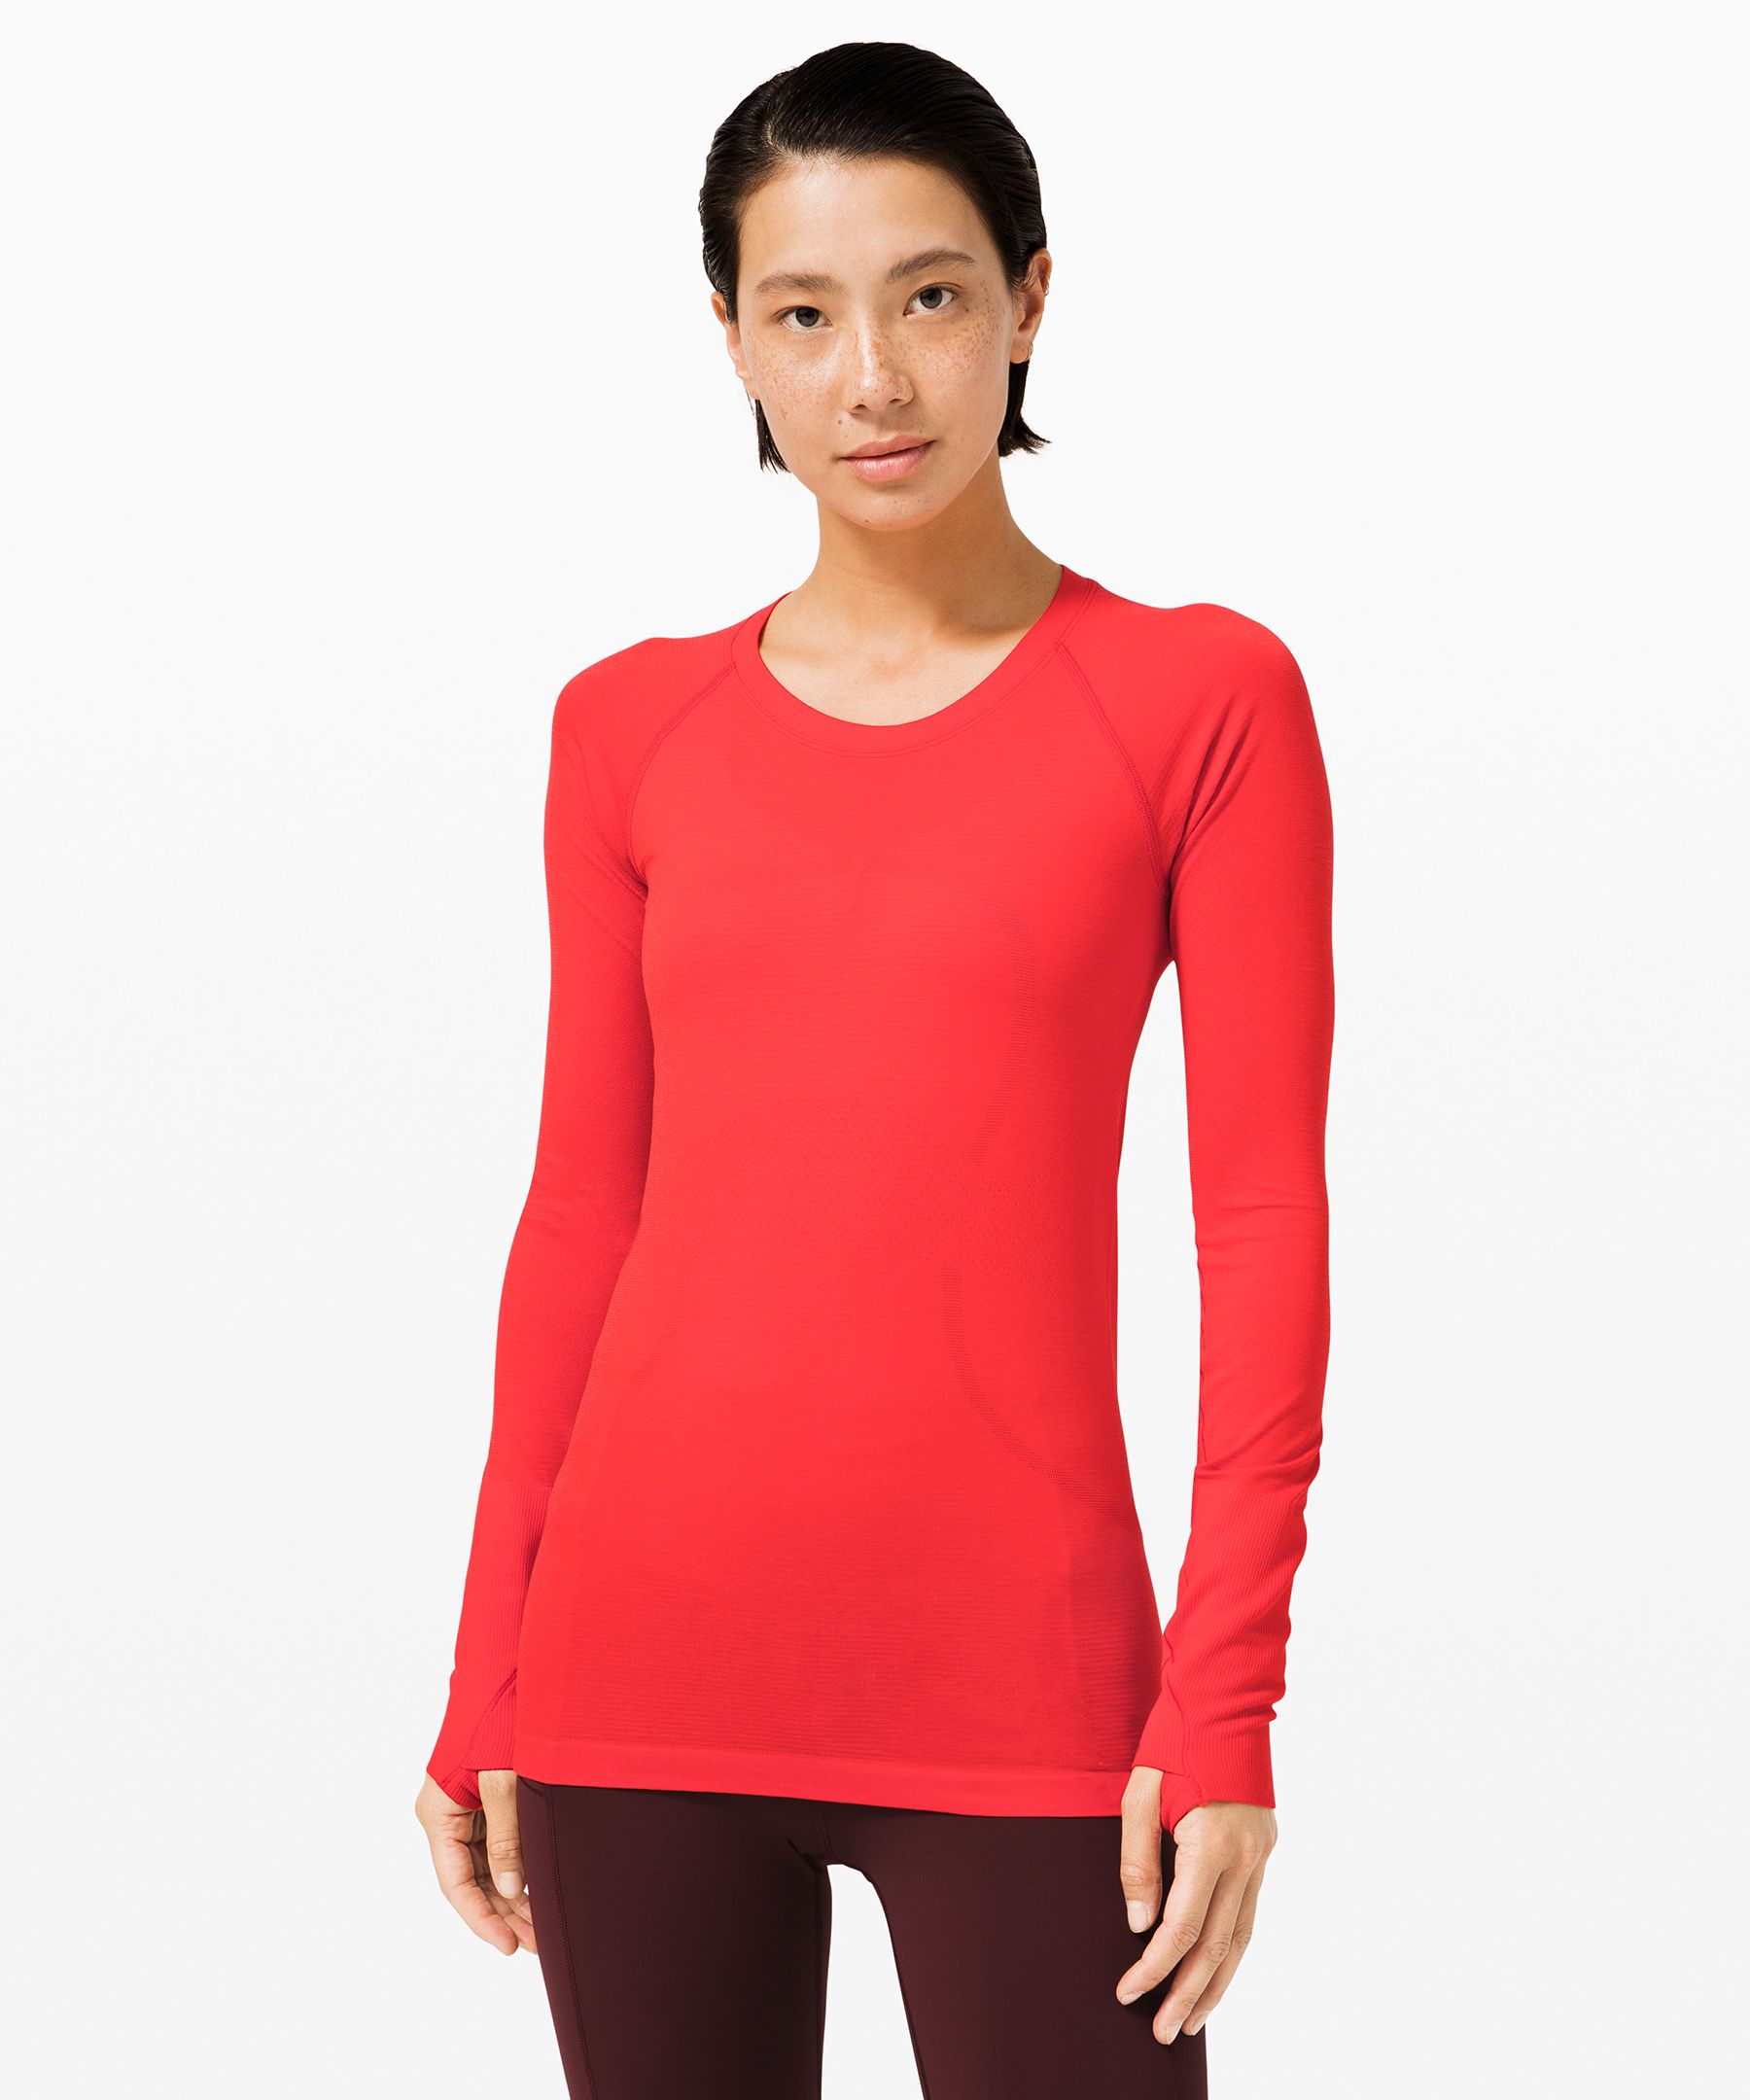 red lululemon shirt